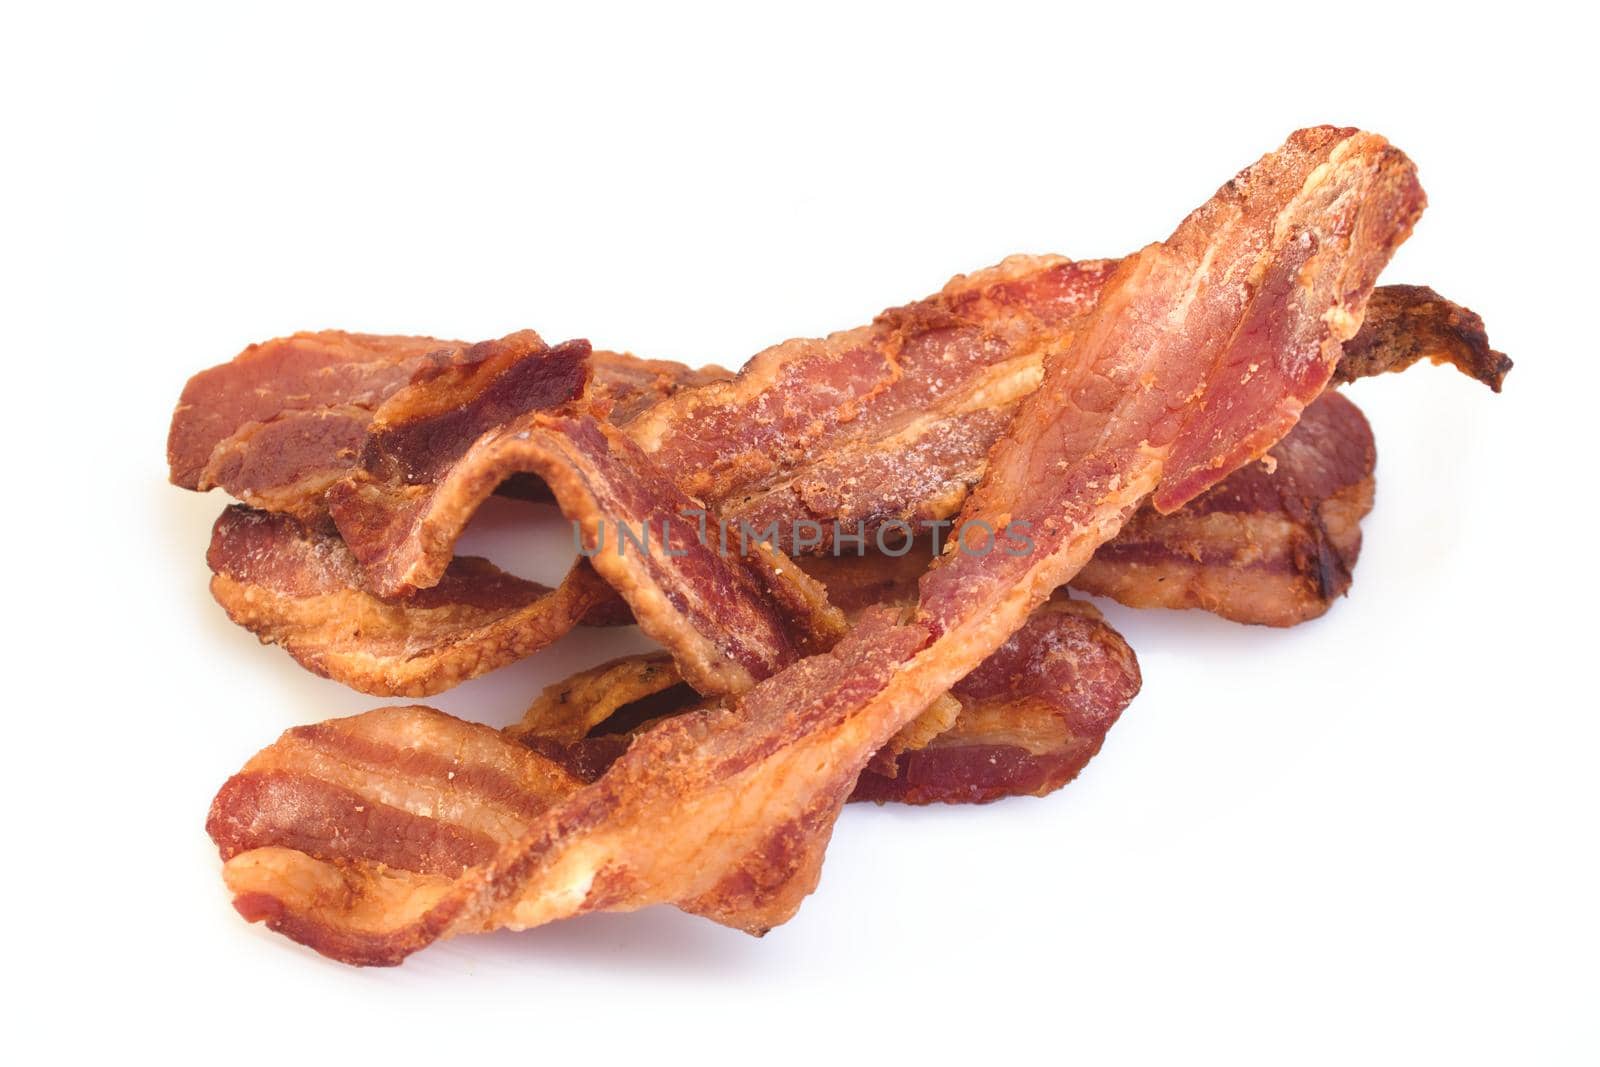 Crispy bacon rashers isolated against a white background